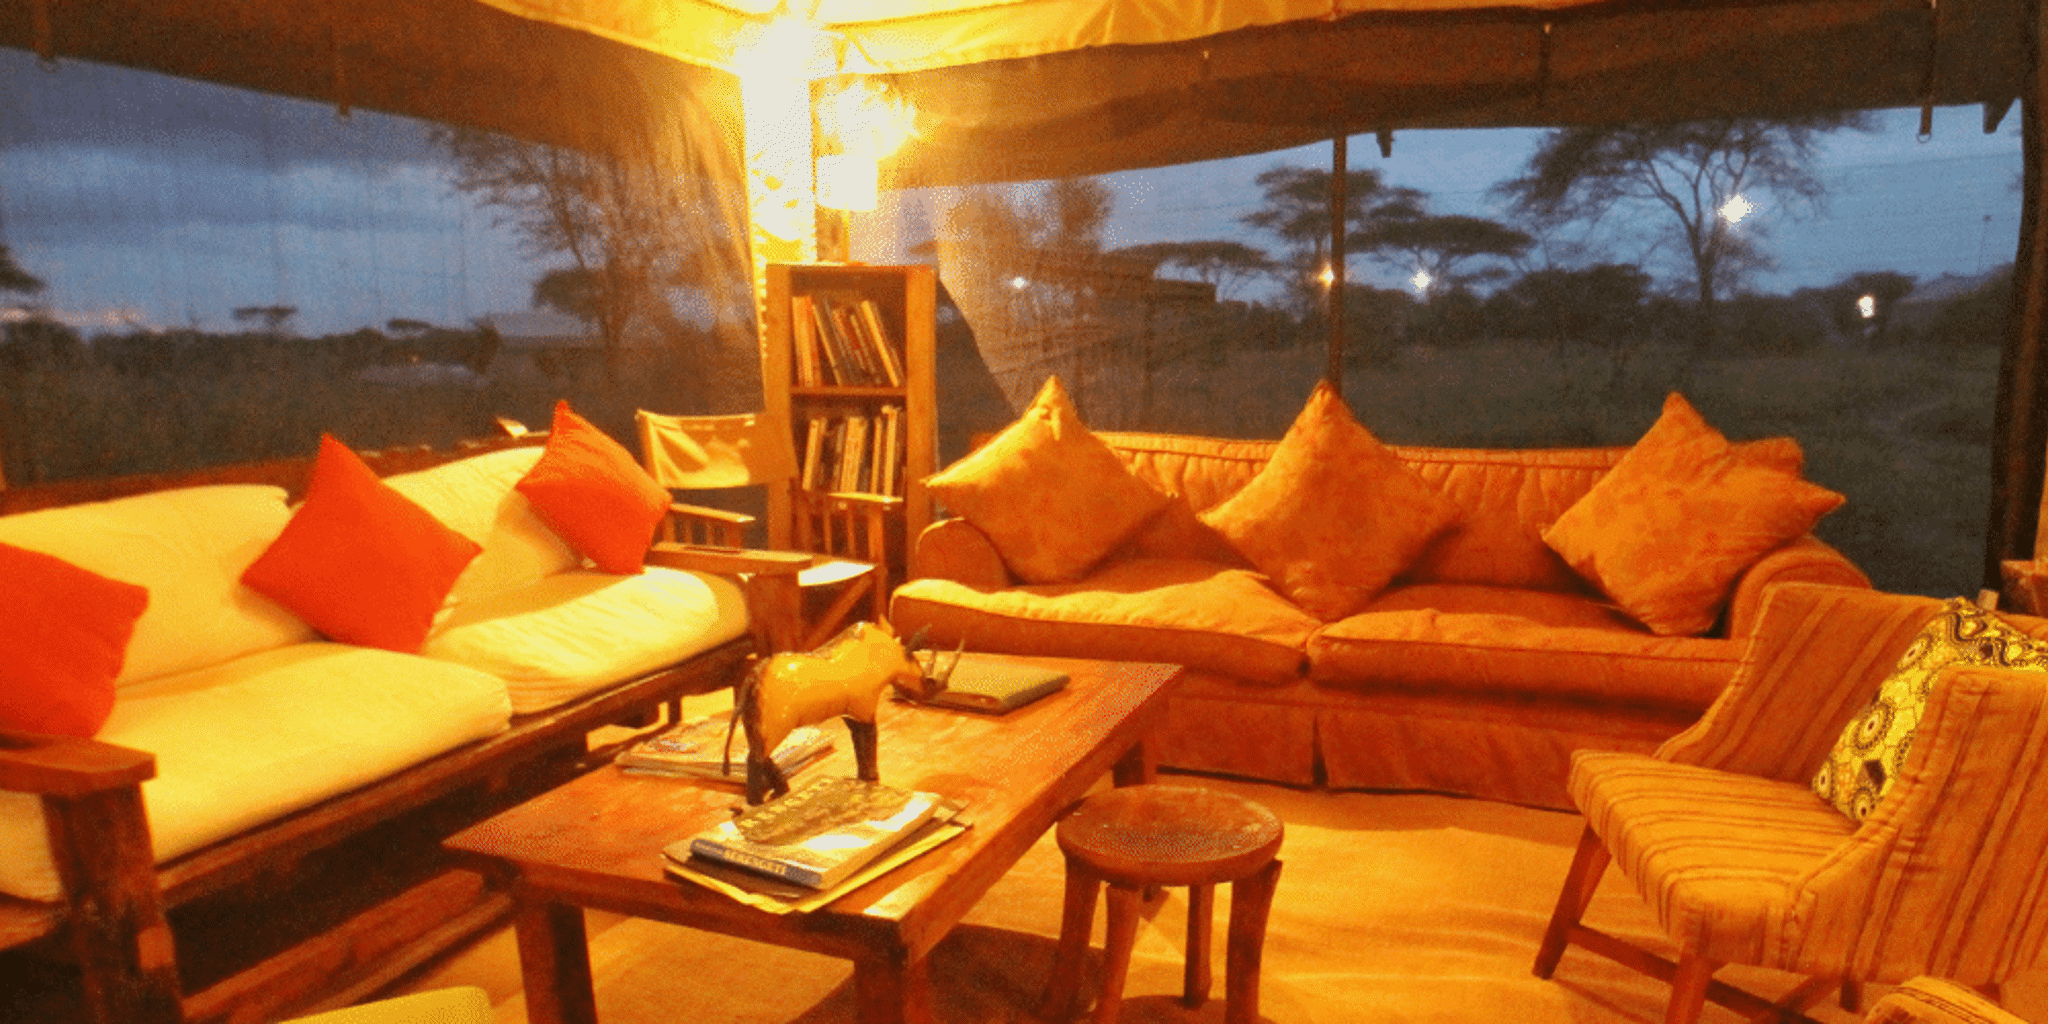 lounge area, pembezoni classic green camp, the serengeti, tanzania